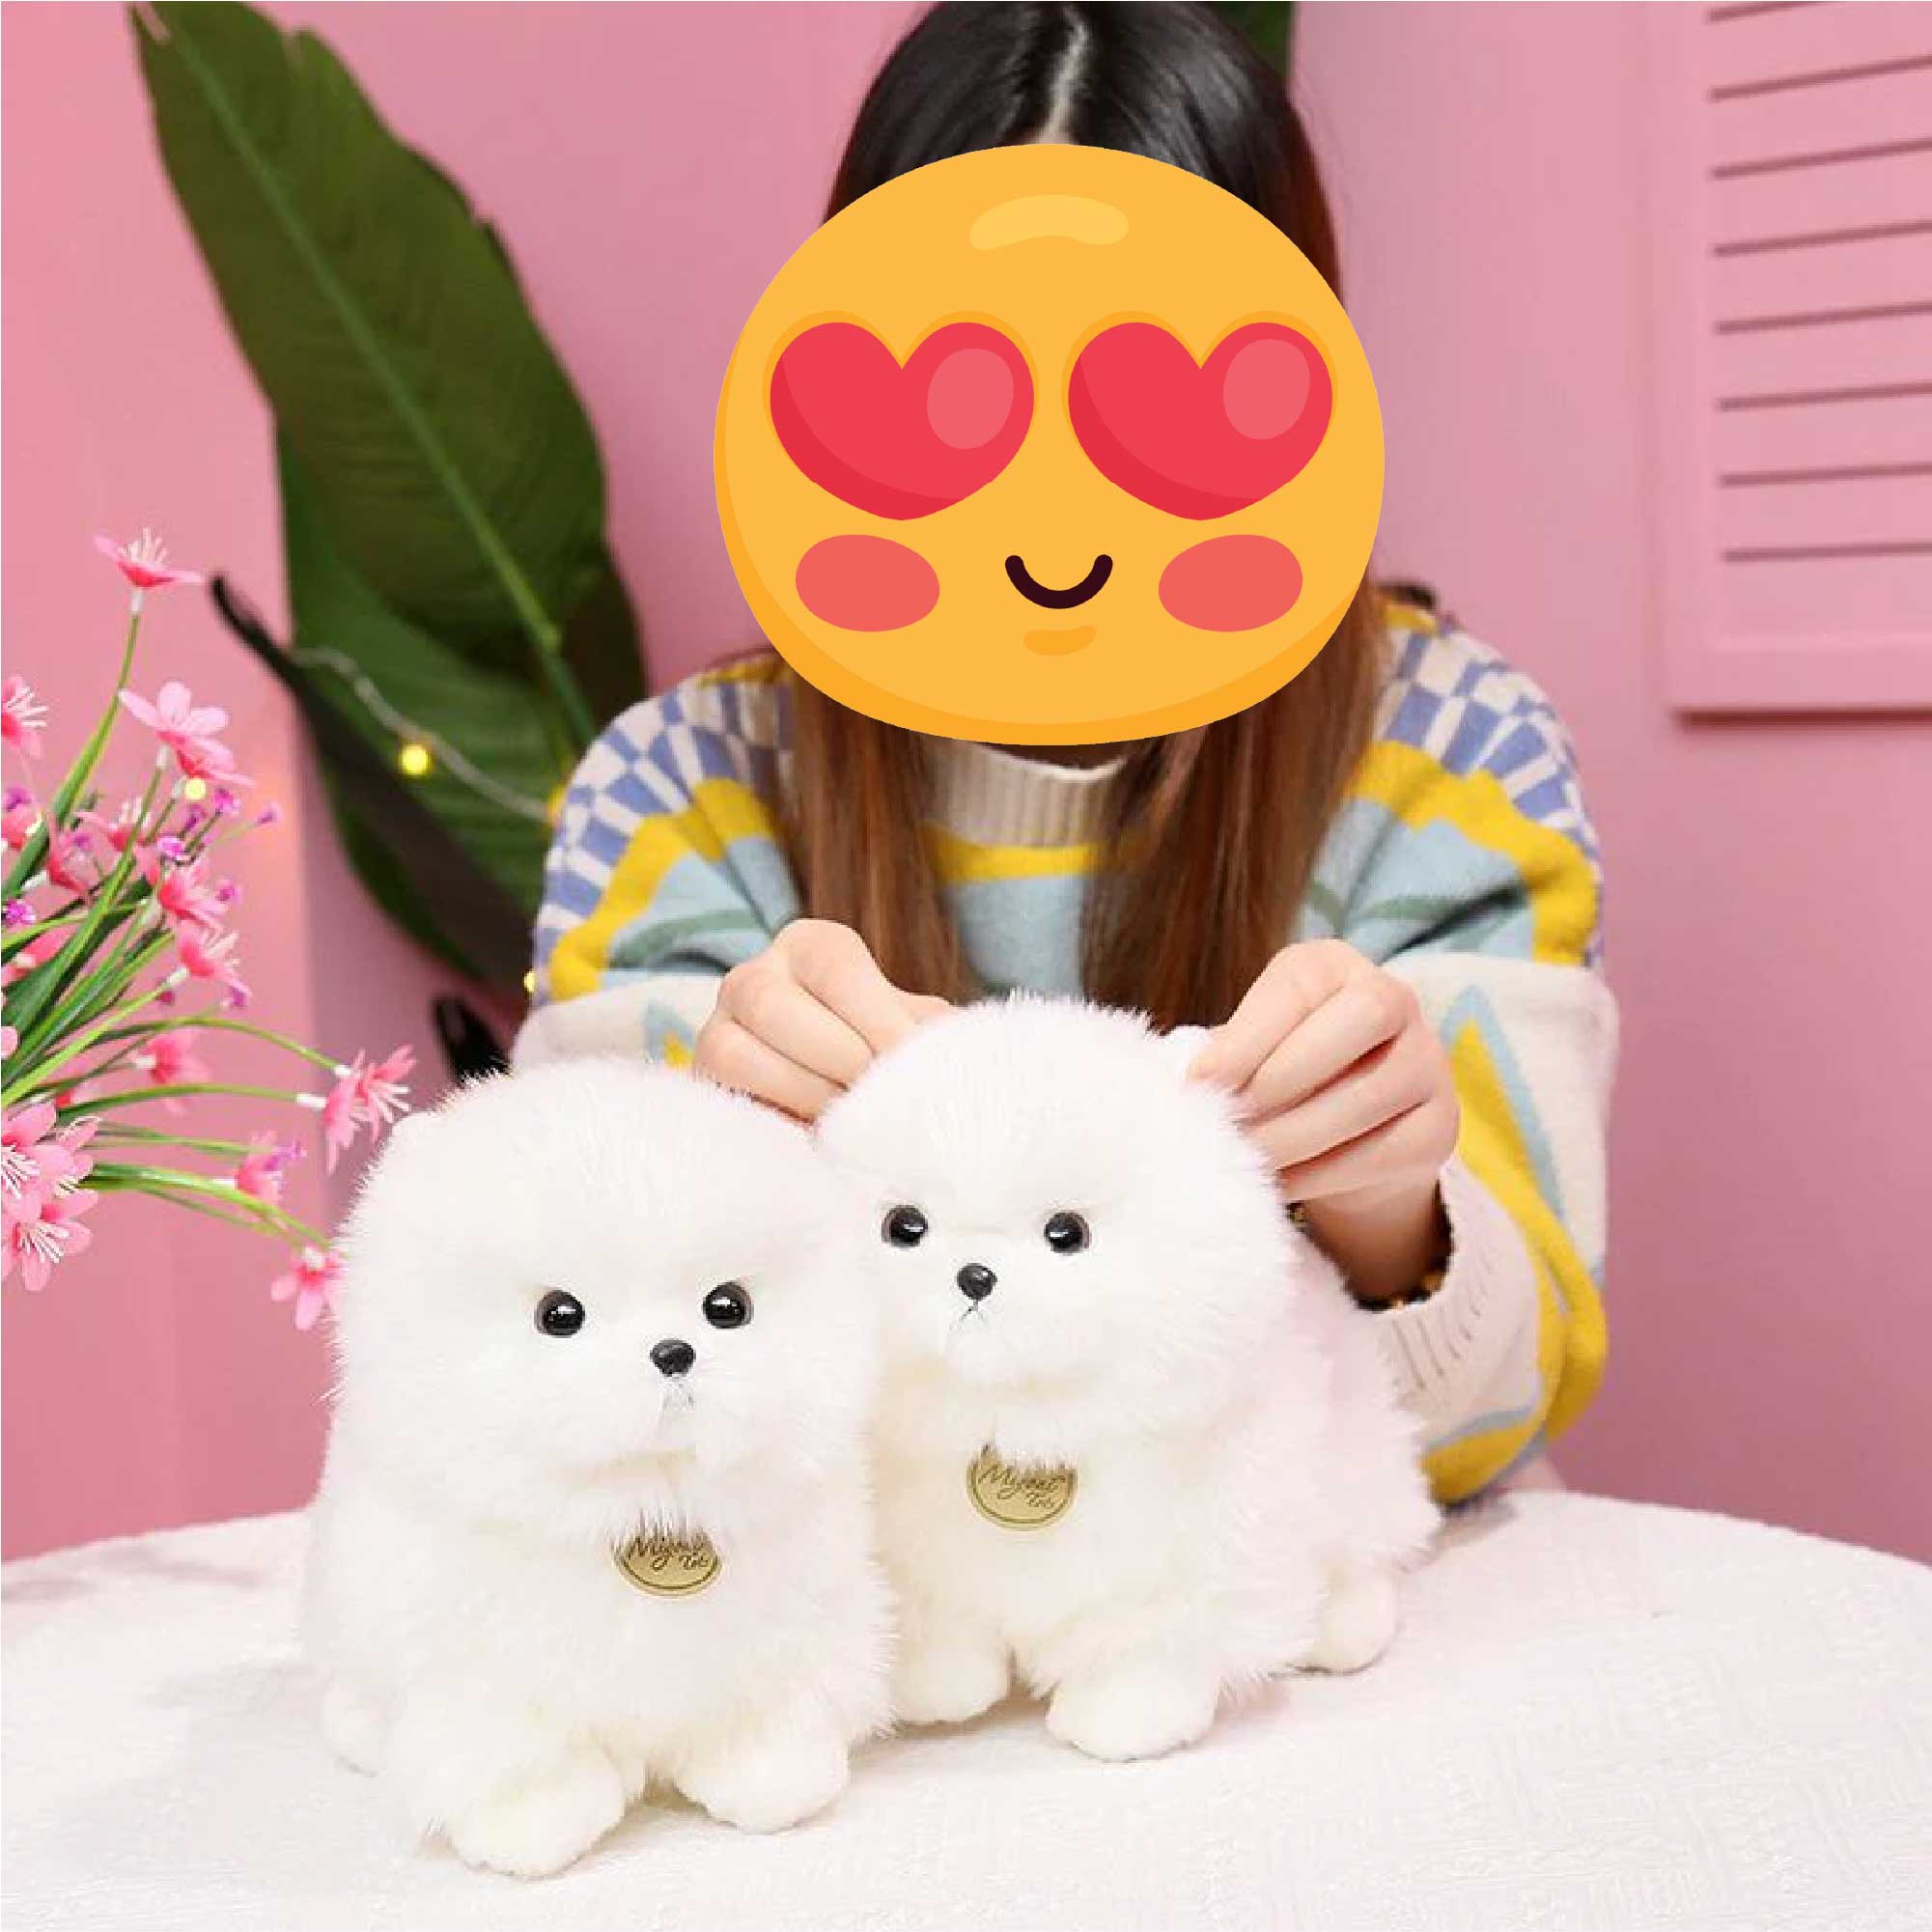 Fluffy White Pomeranian Stuffed Animal Plush Toy